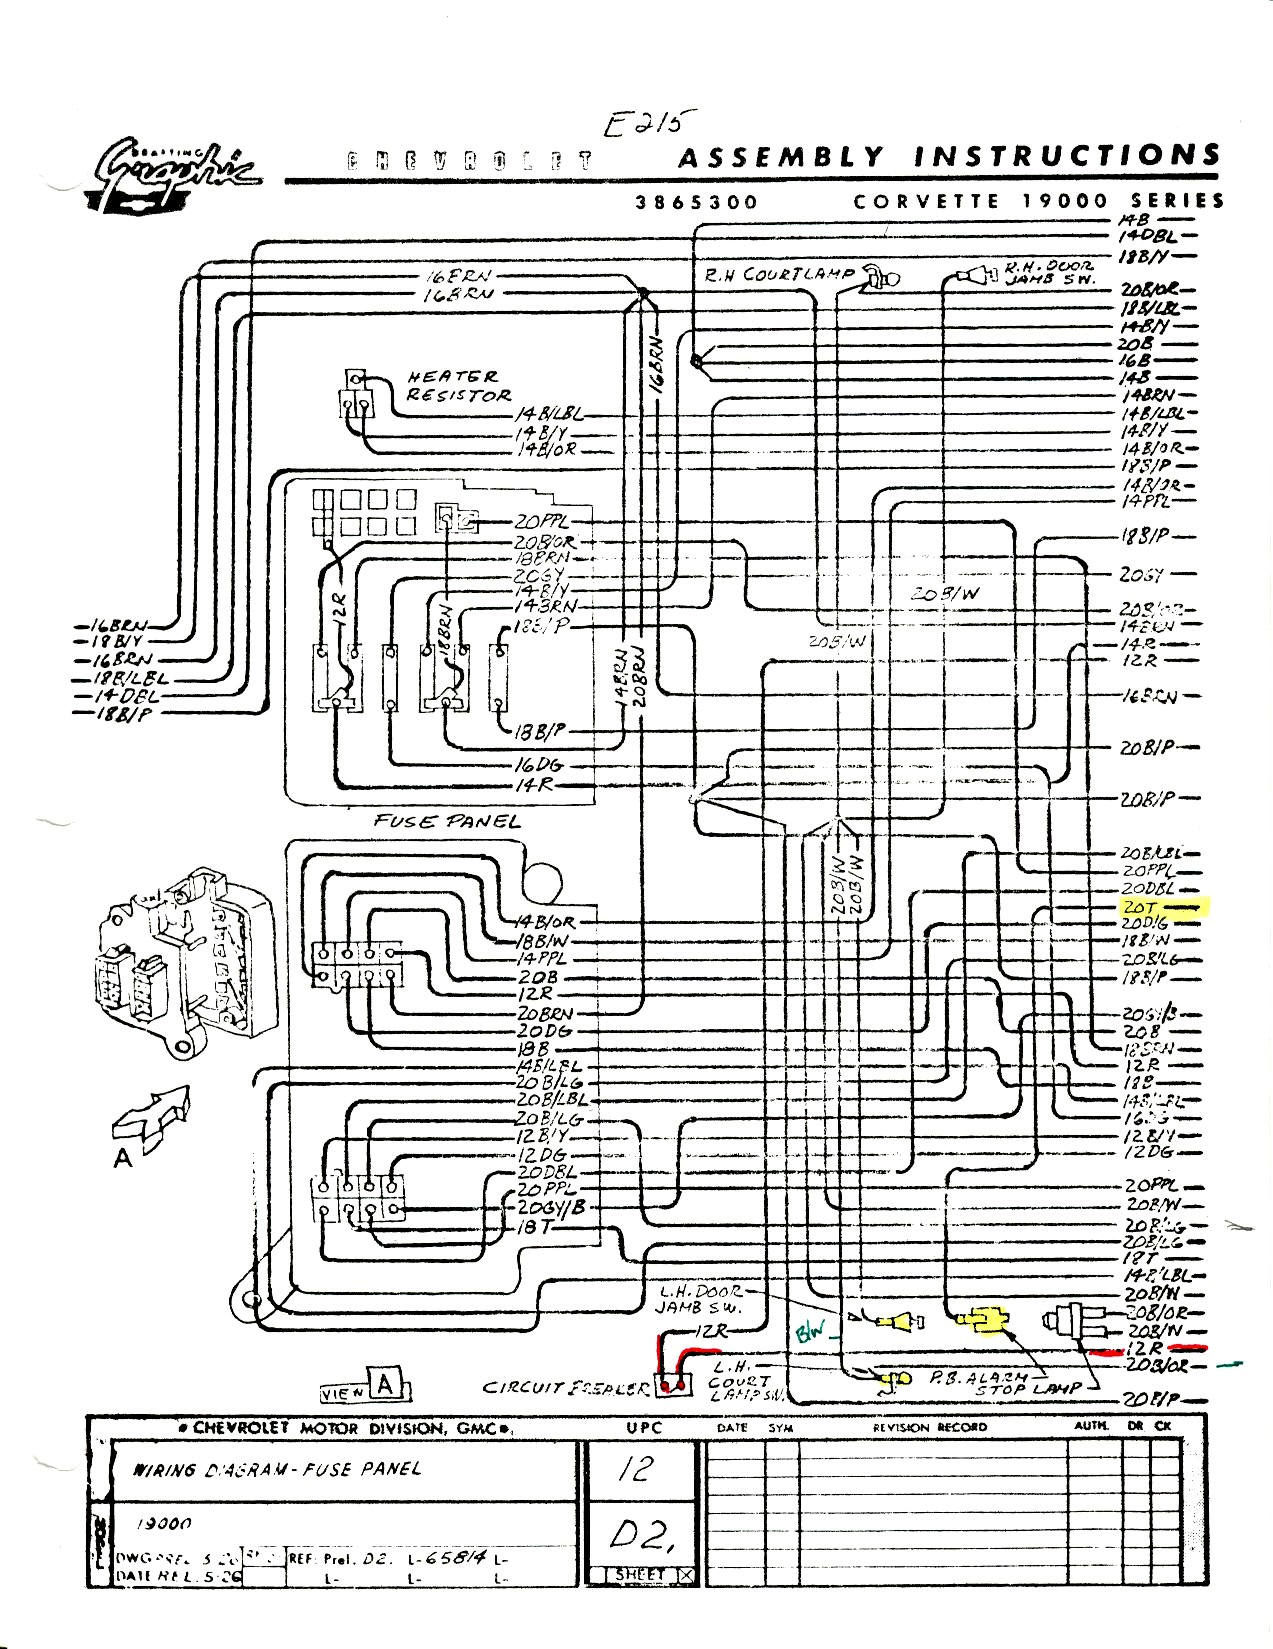 diagram-1978-corvette-wiring-diagram-pdf-mydiagram-online